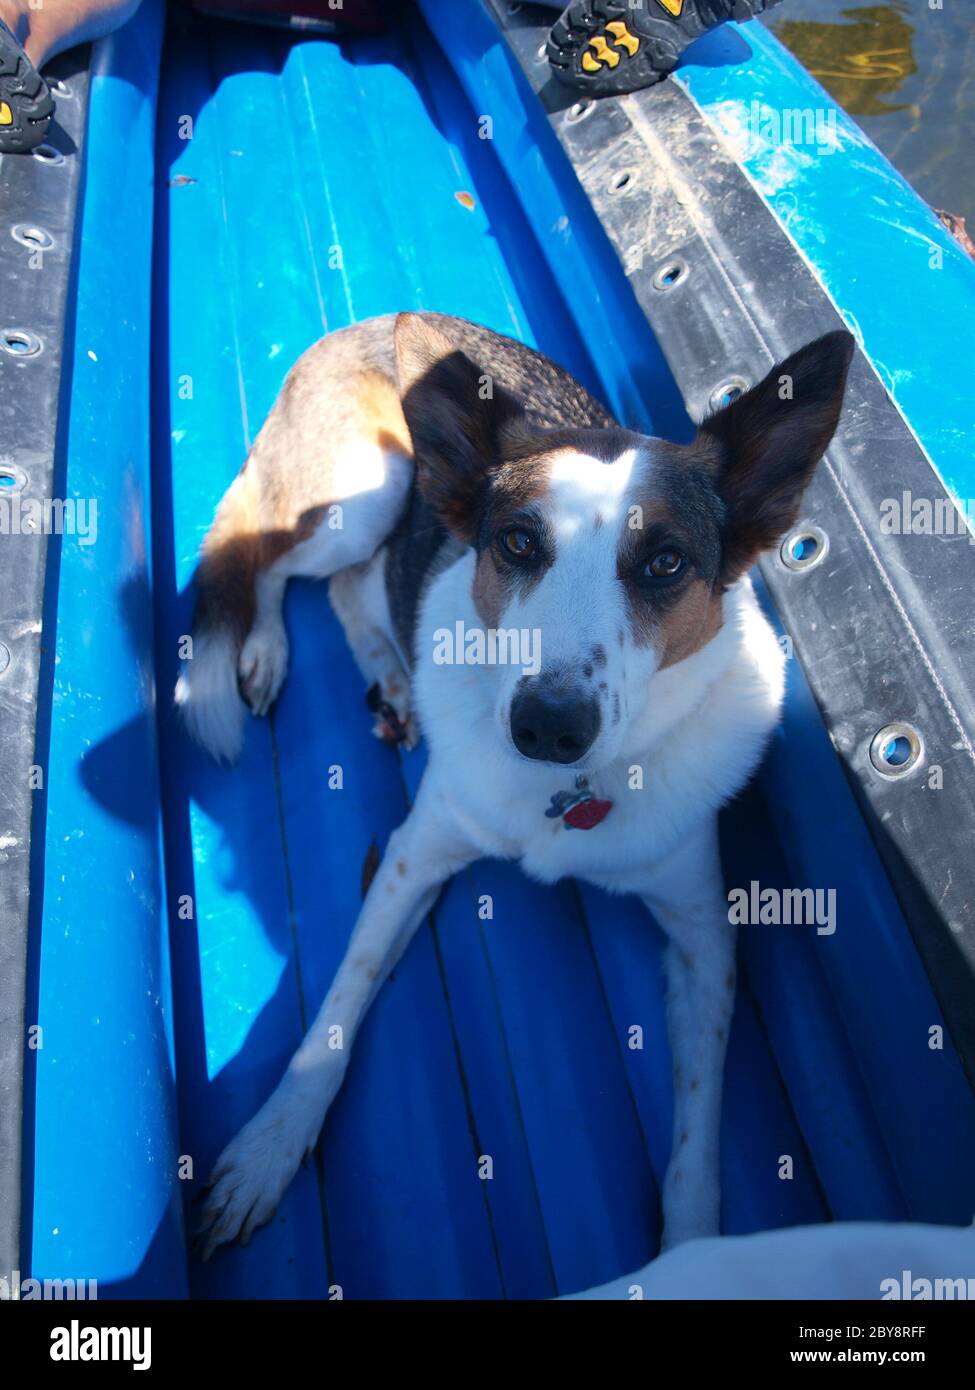 Dog awaits river rafting trip Stock Photo